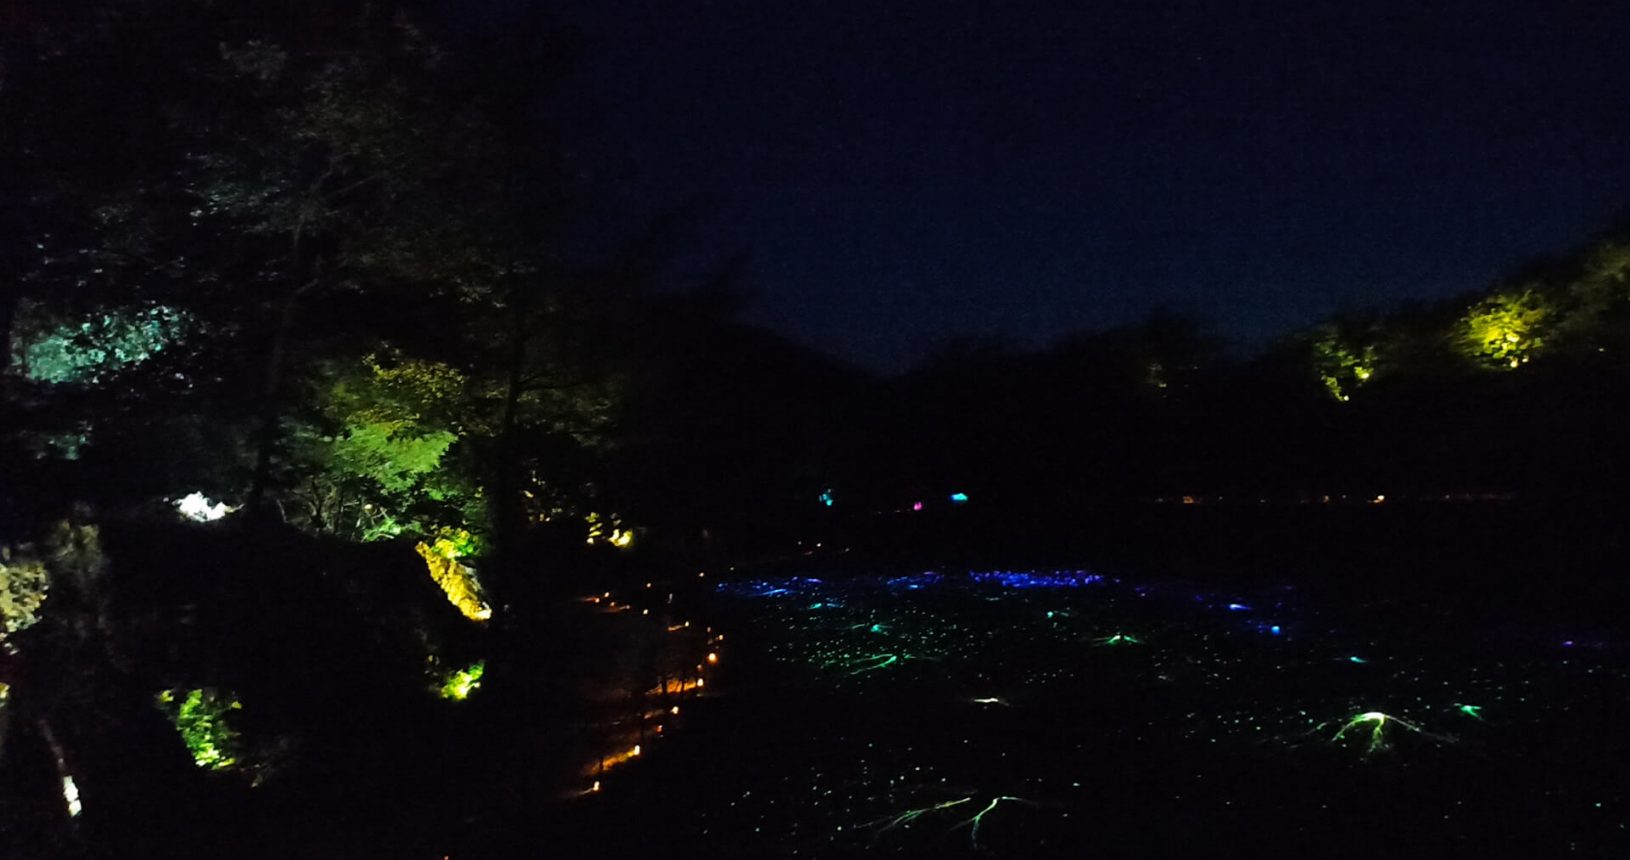 Night field with lights at Lightland park